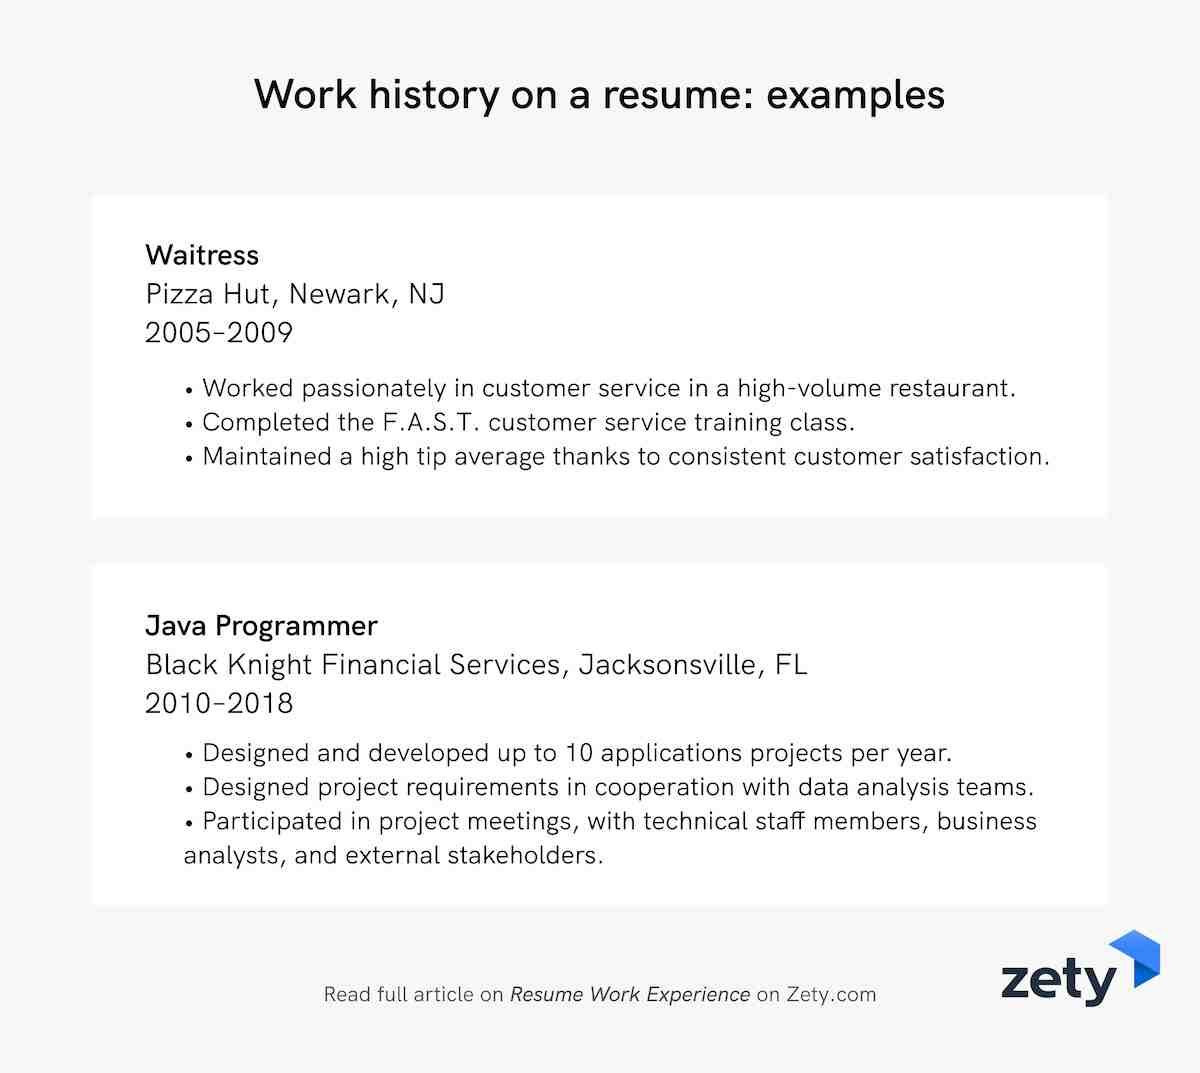 Job Application Work Experience Resume Sample Resume Work Experience, History & Job Description Examples